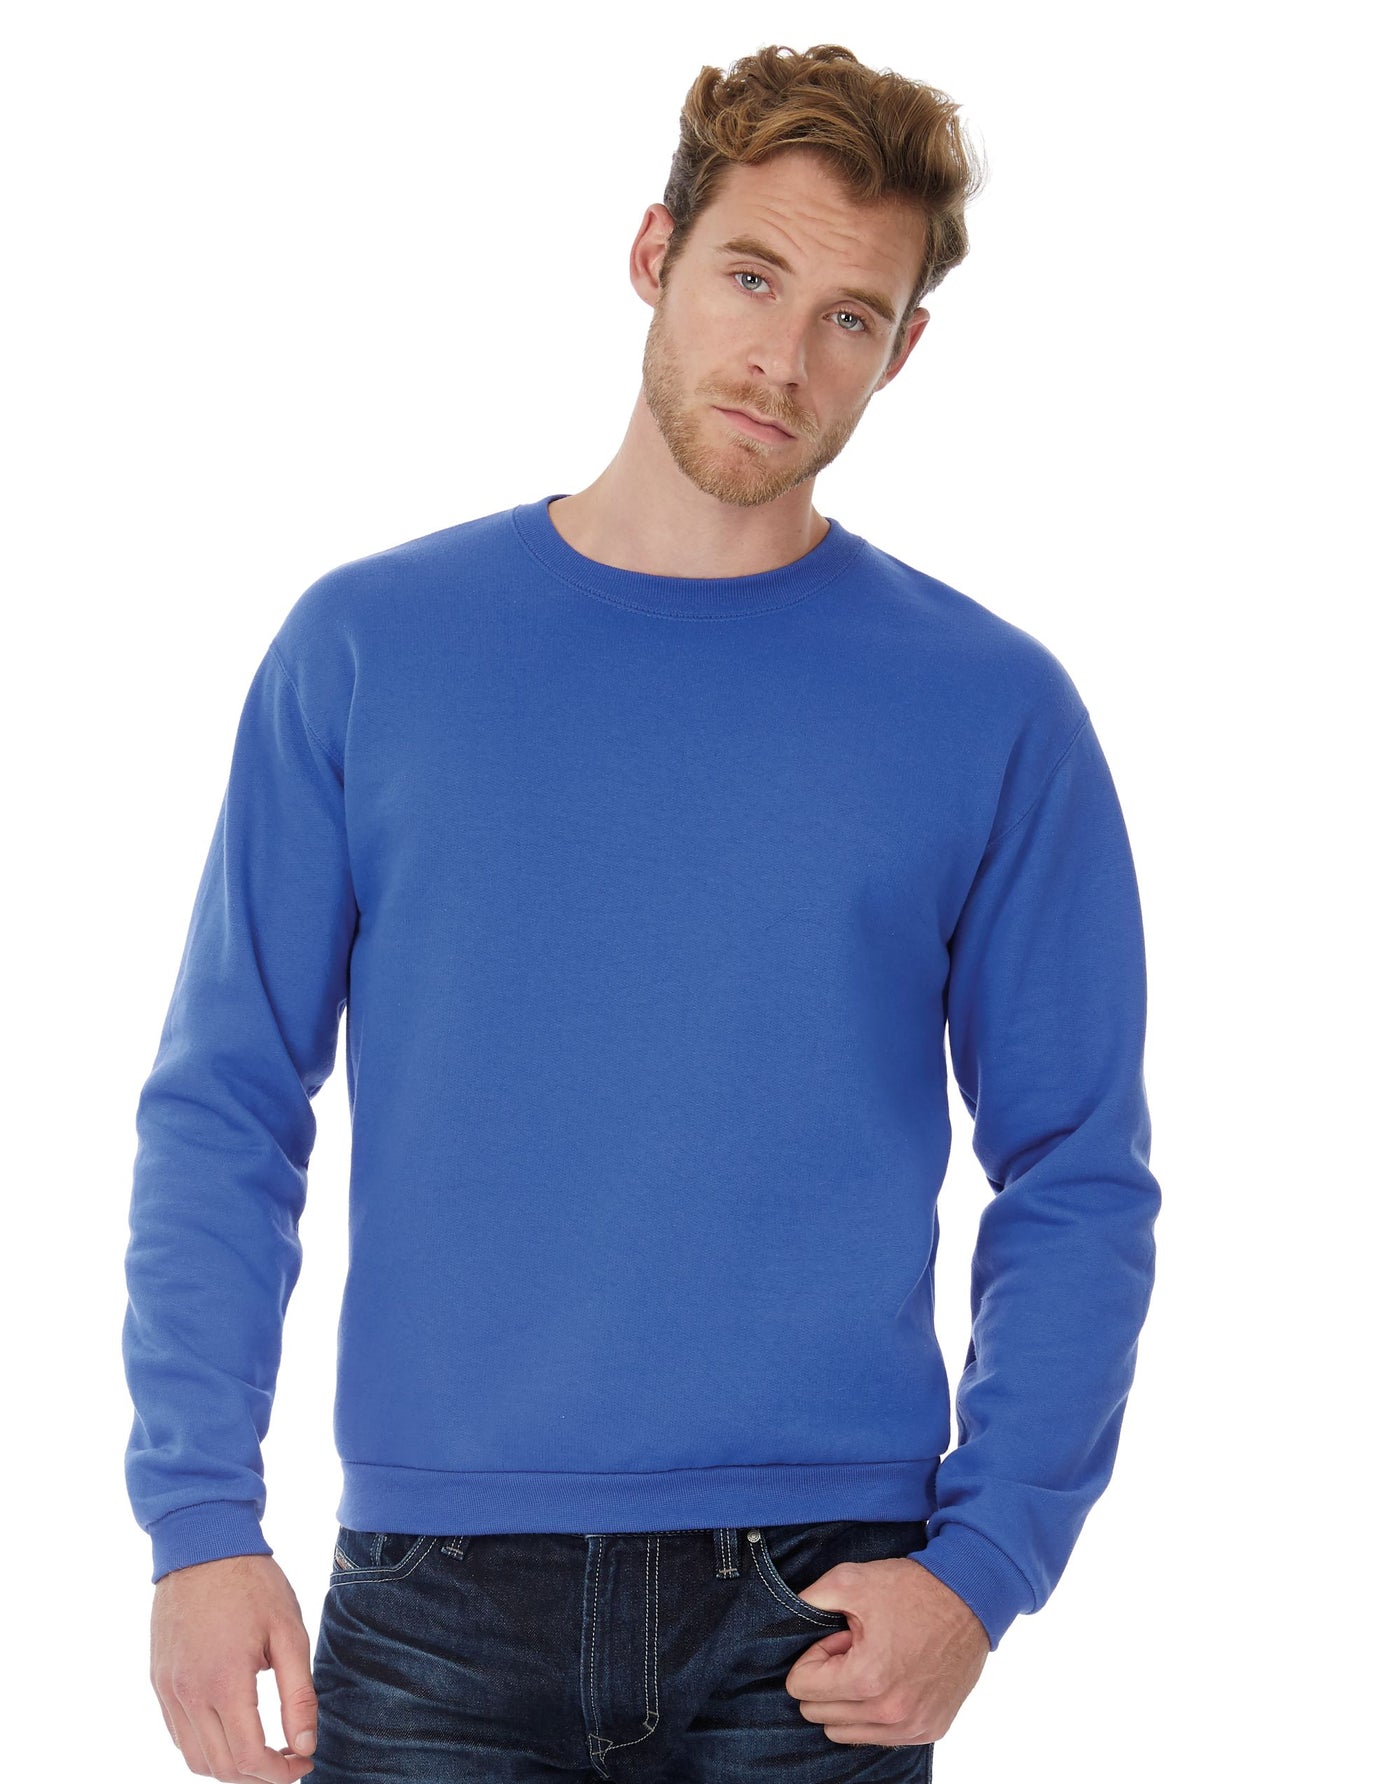 Personalise Adult Unisex Sweatshirt Model Image